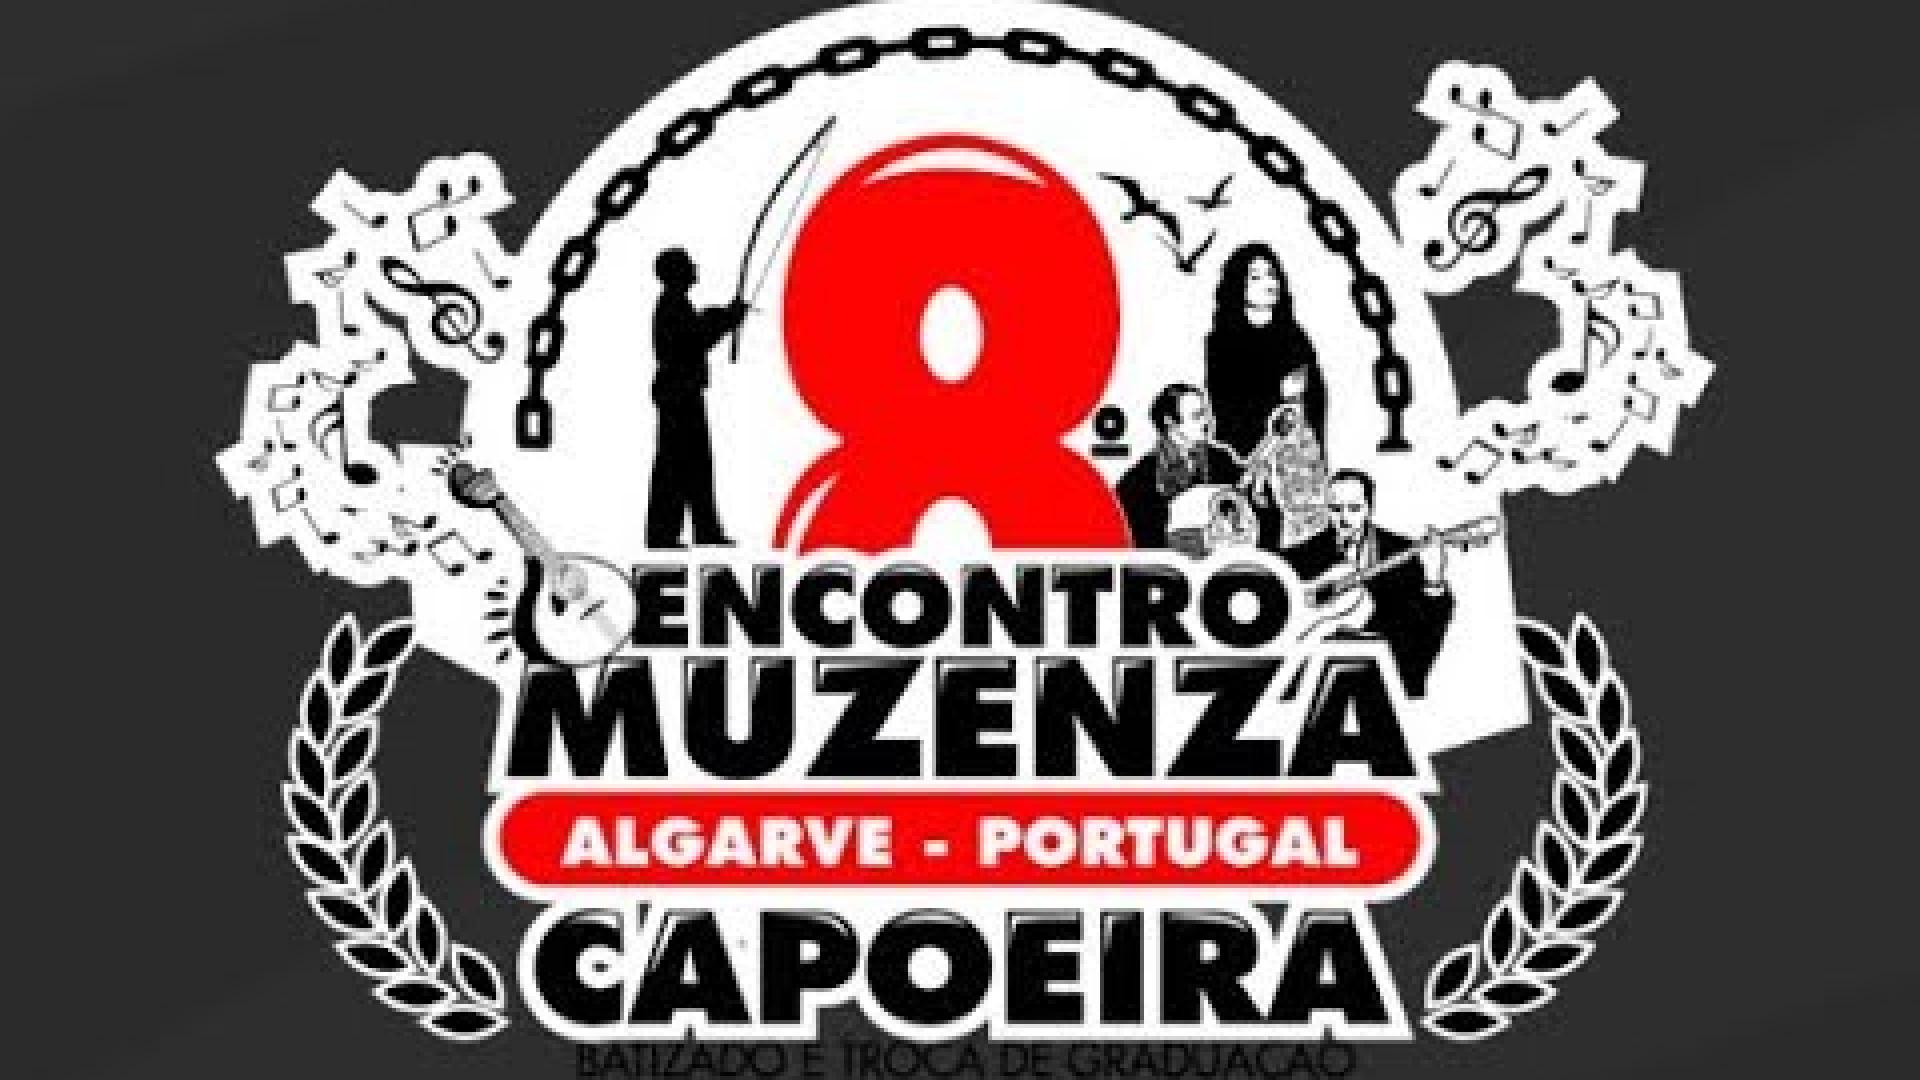 Preview image for the video "8º Encontro Muzenza Algarve de Capoeira 2018 - Vídeo Promocional".